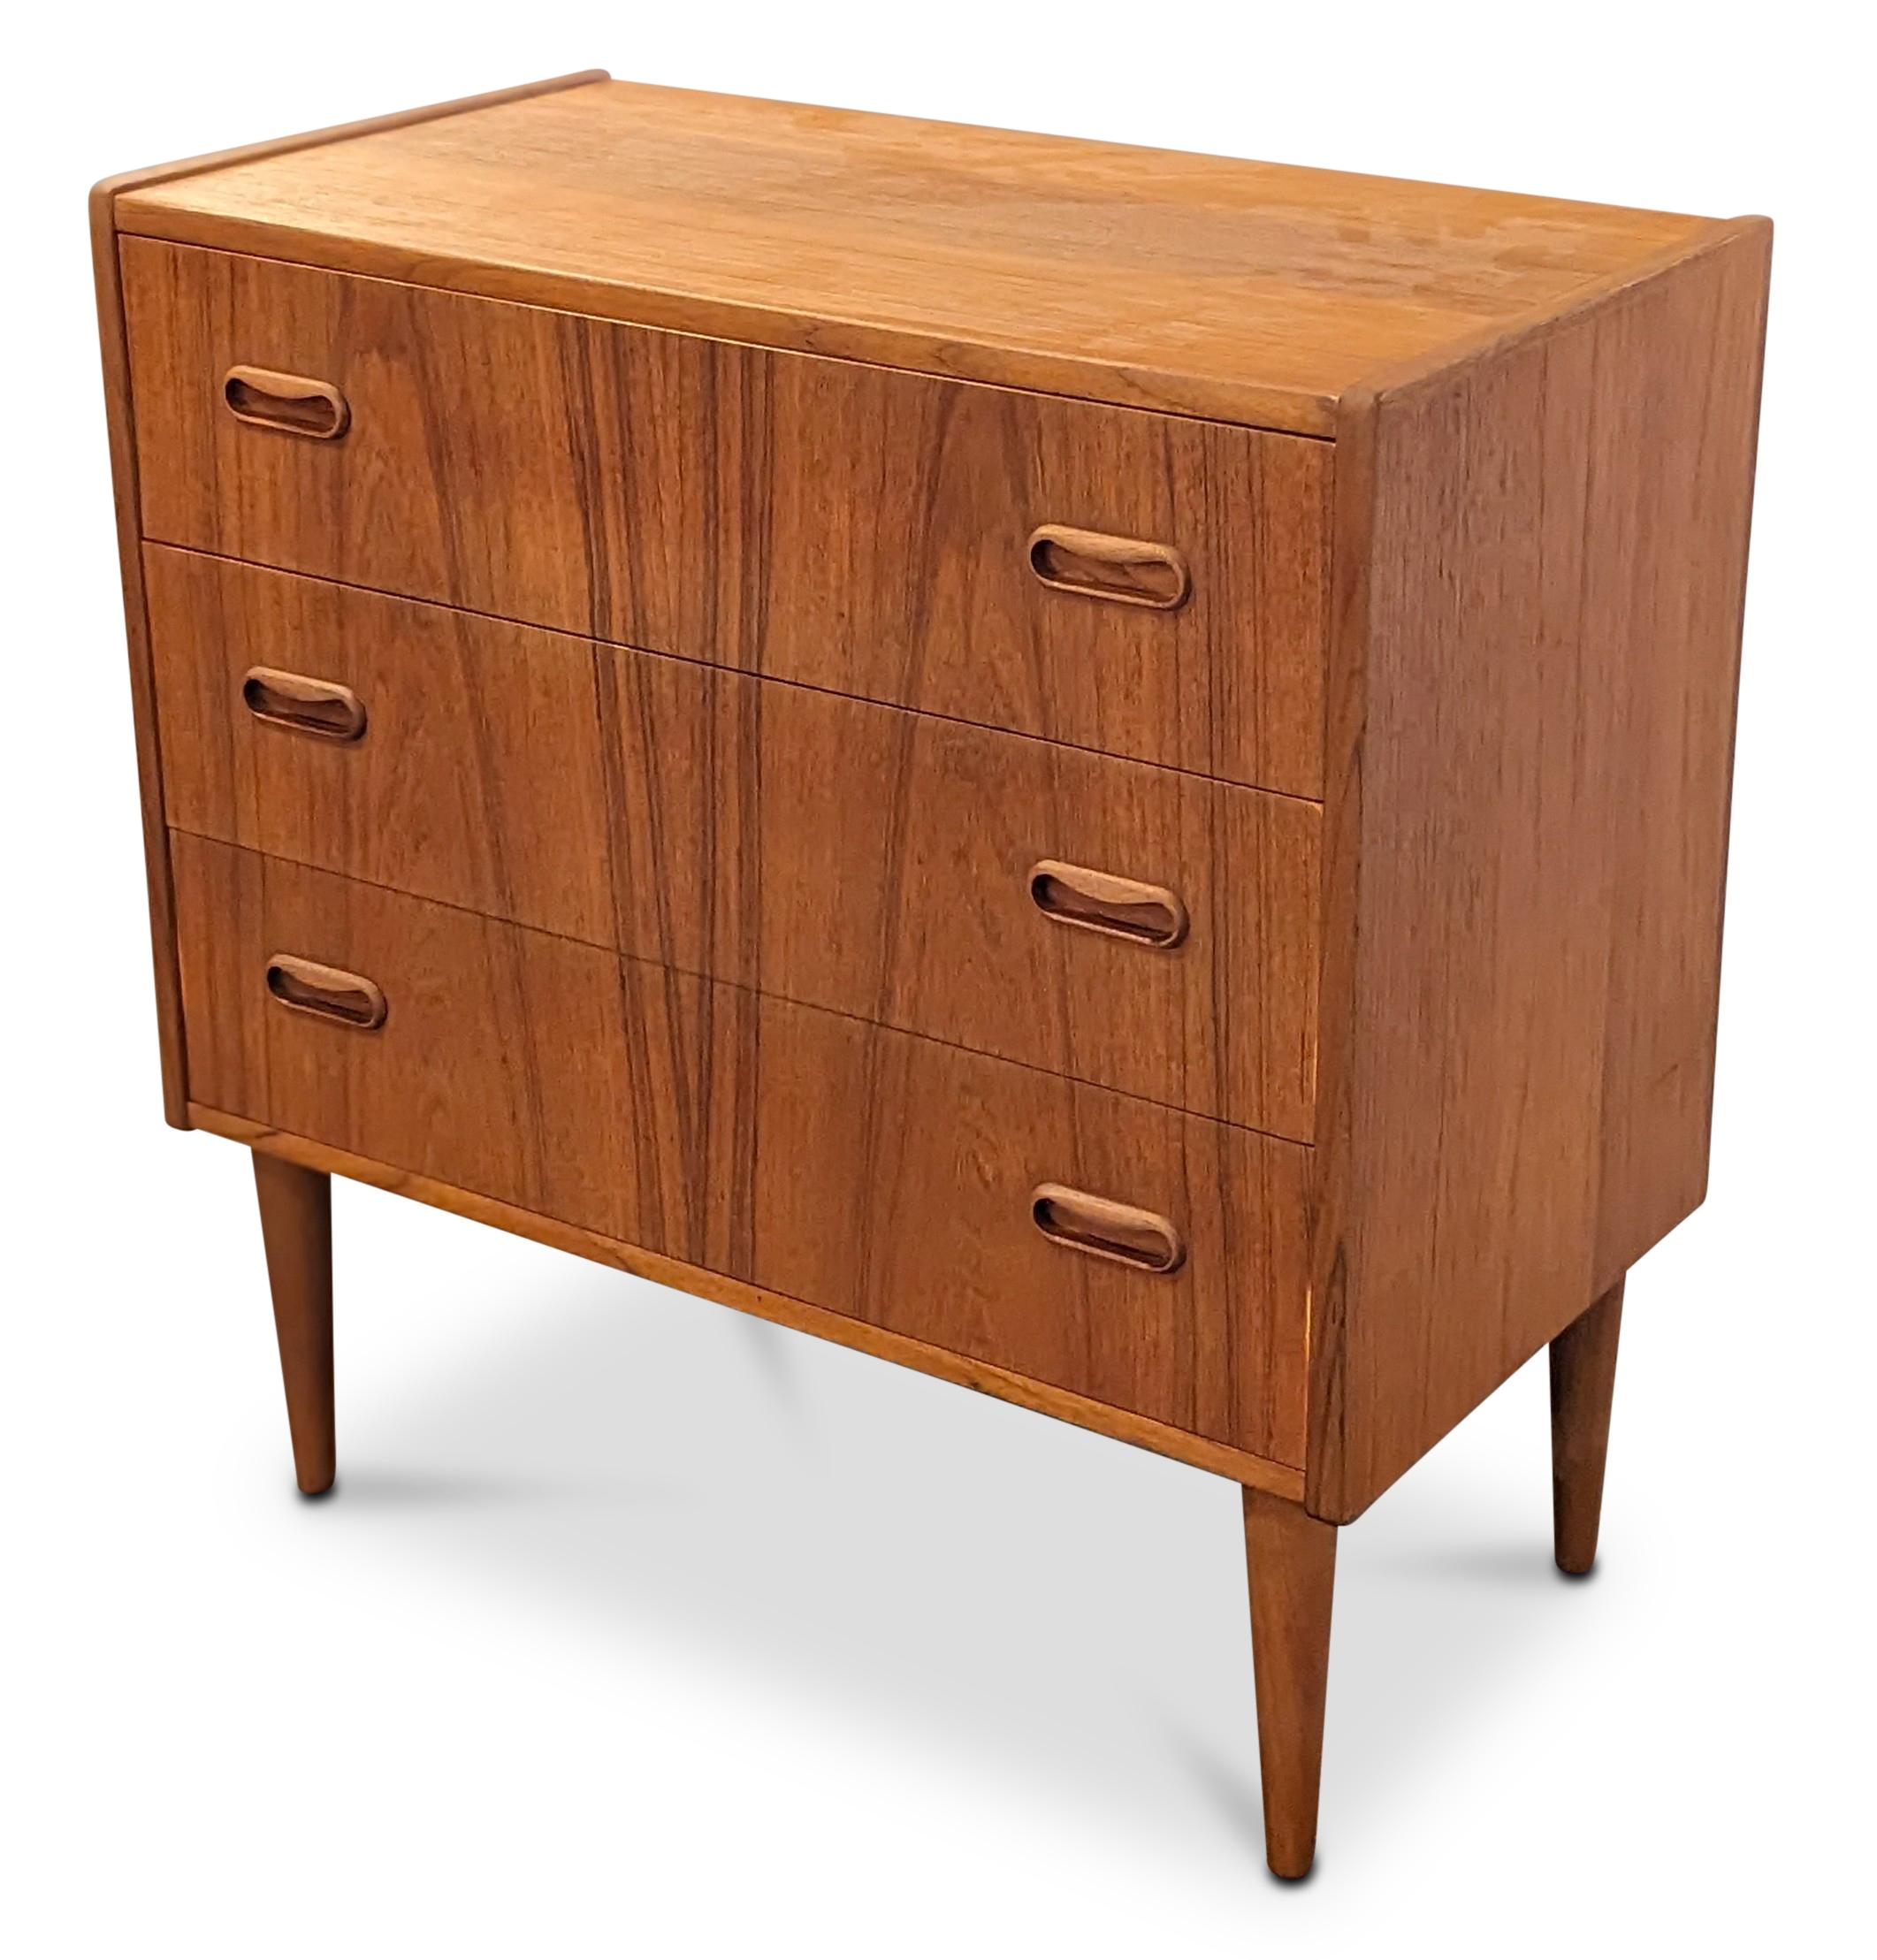 Vintage Danish Mid Century Teak Dresser / Nightstand - 072343 1